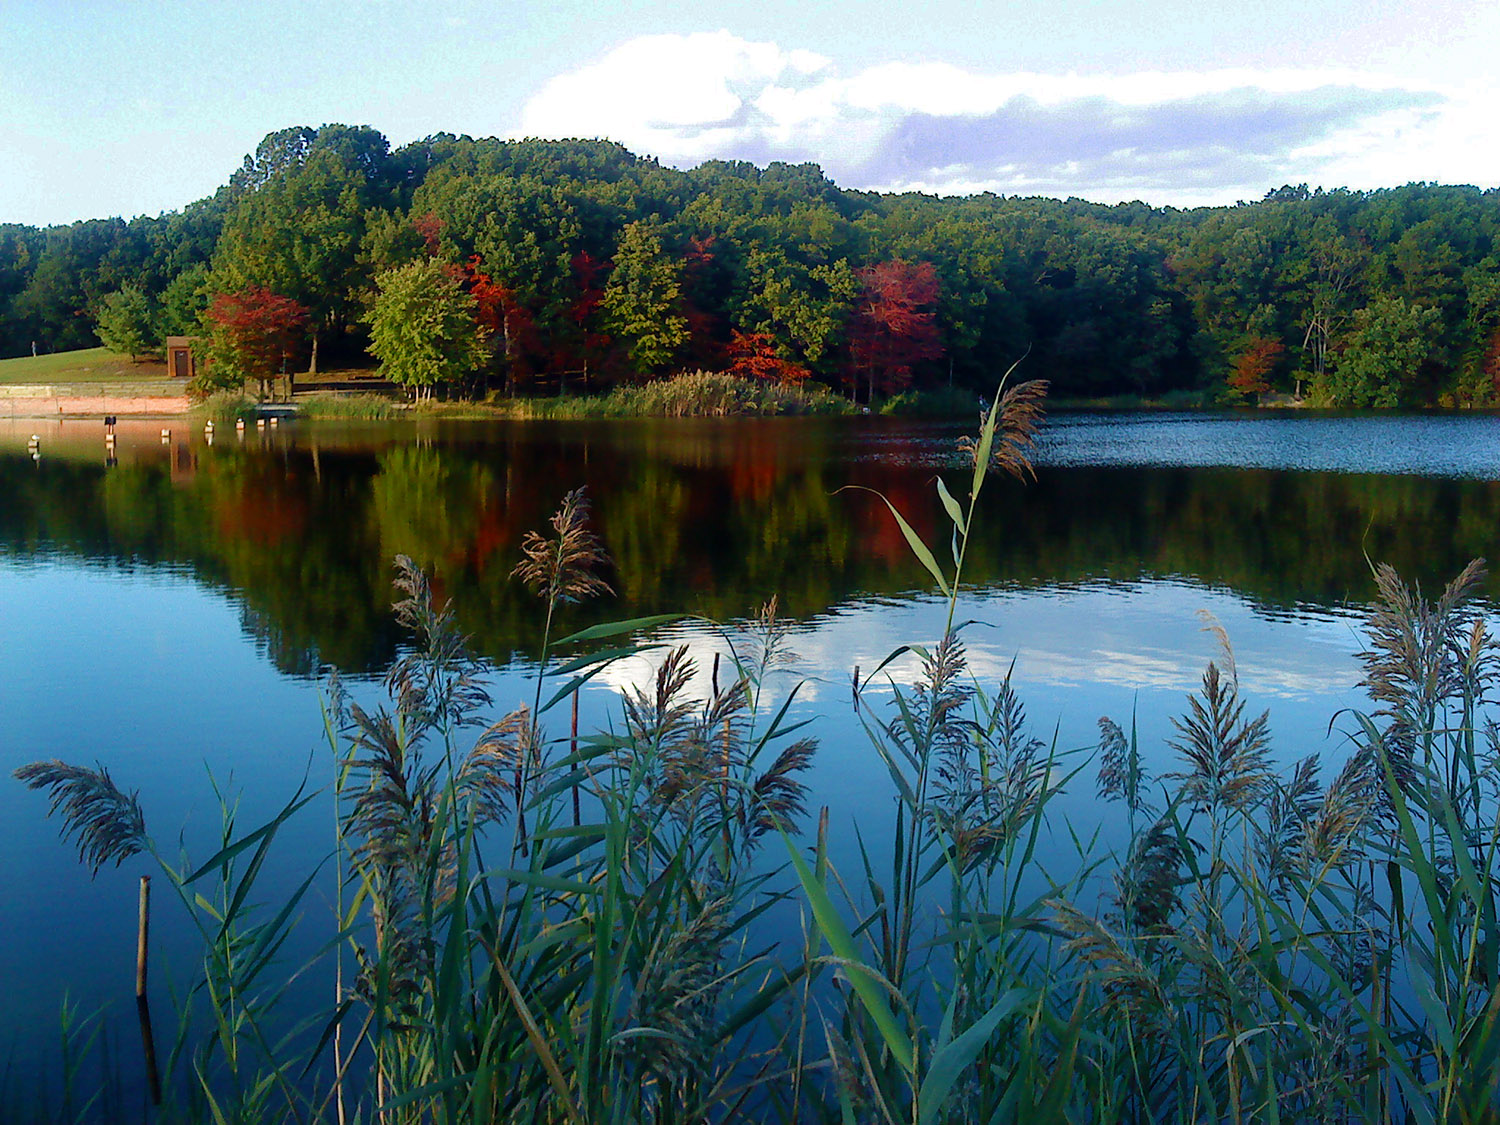 Photograph of Hooks Pond, New Jersey